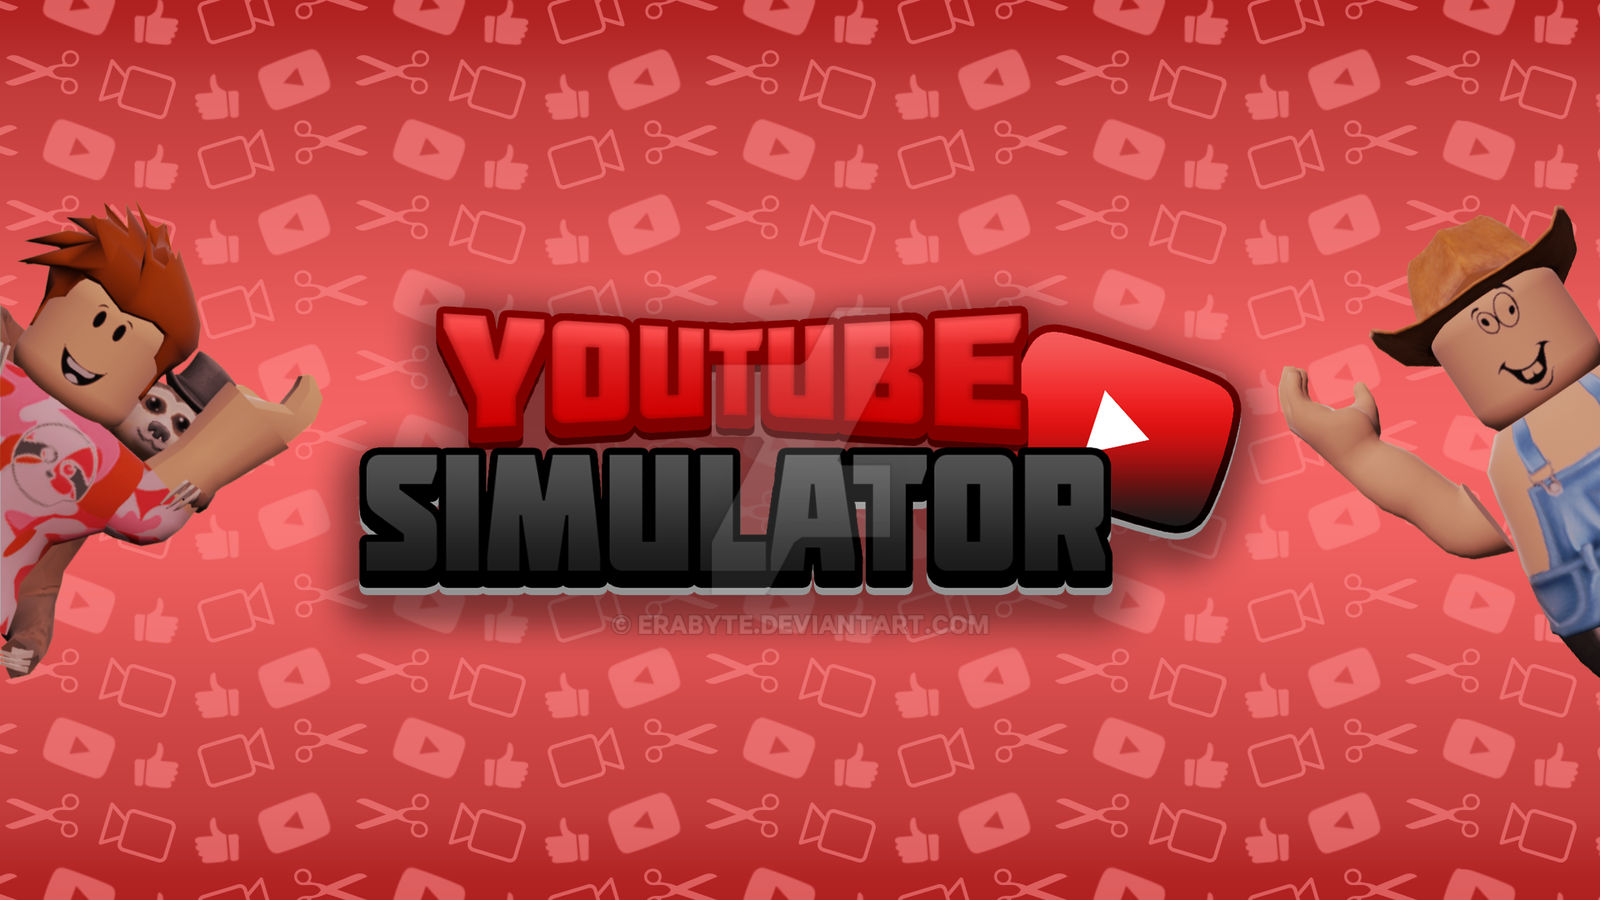 Youtube Simulator Thumbnail By Erabyte On Deviantart - roblox youtube simulator